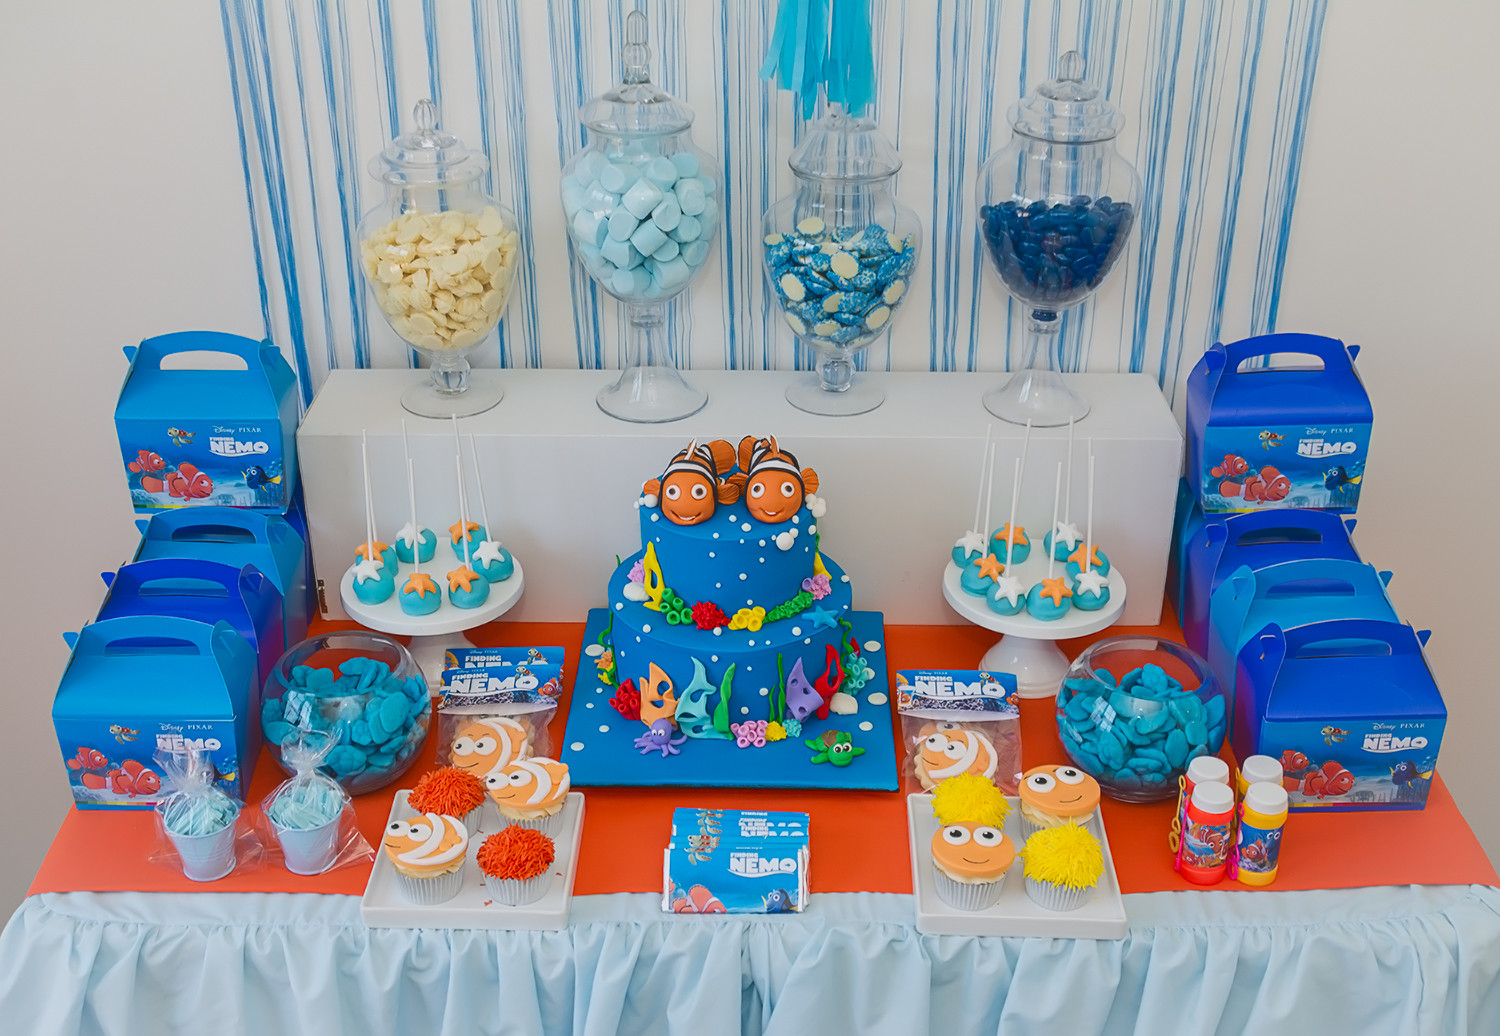 Nemo Birthday Decorations
 FINDING NEMO THEMED BIRTHDAY PARTY